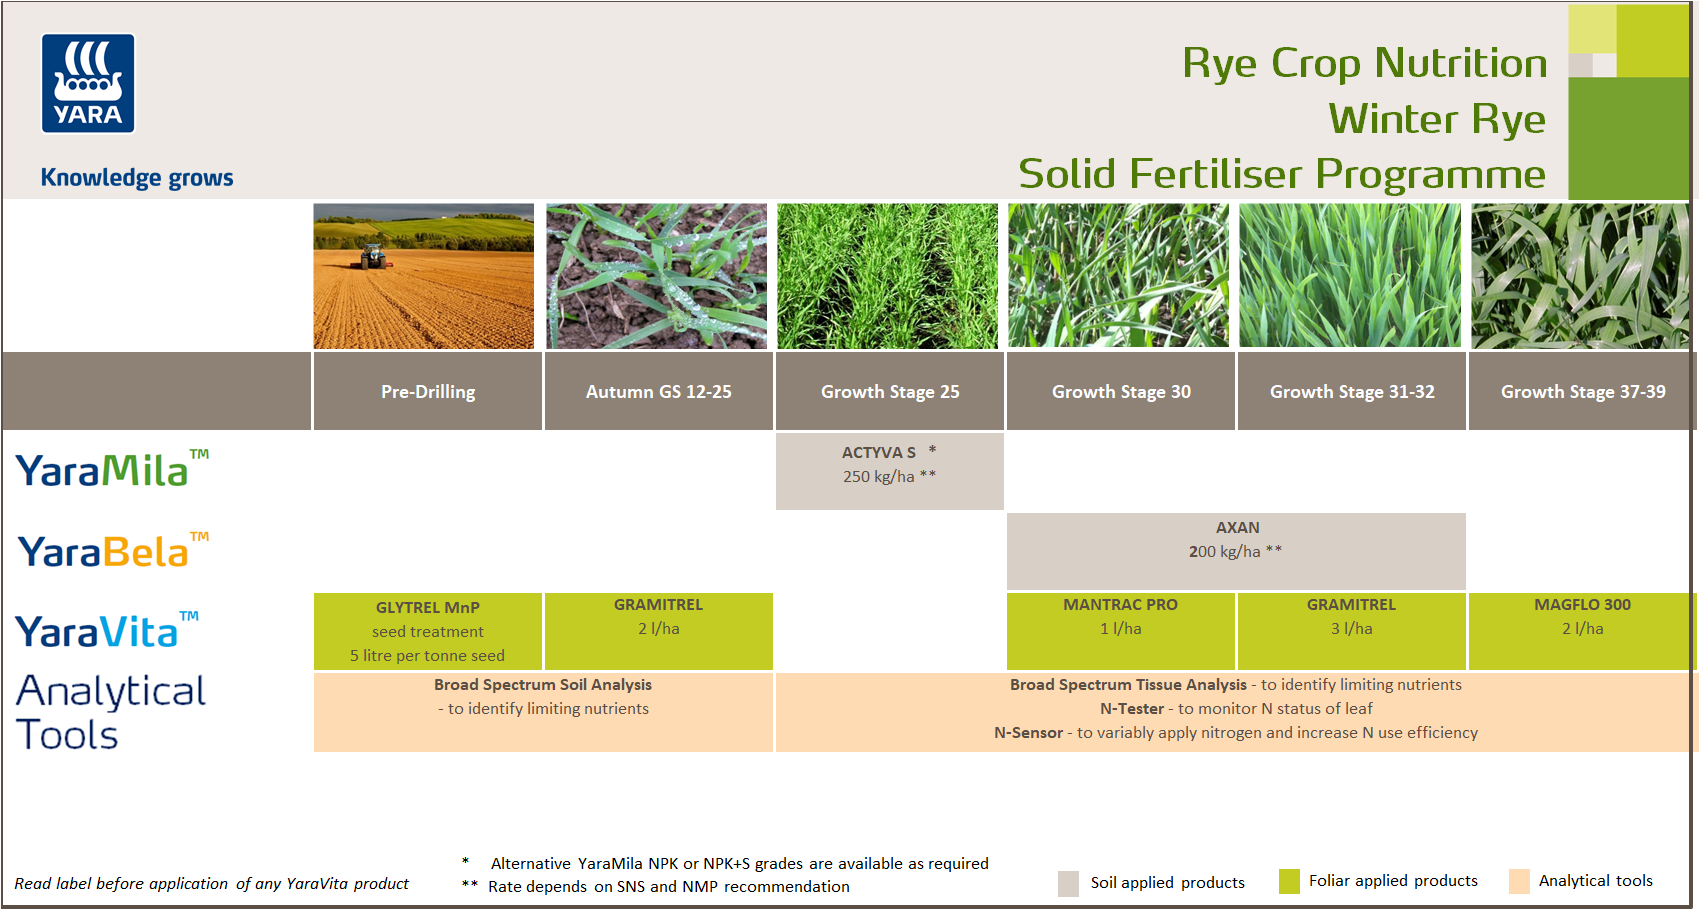 Rye fertiliser programme